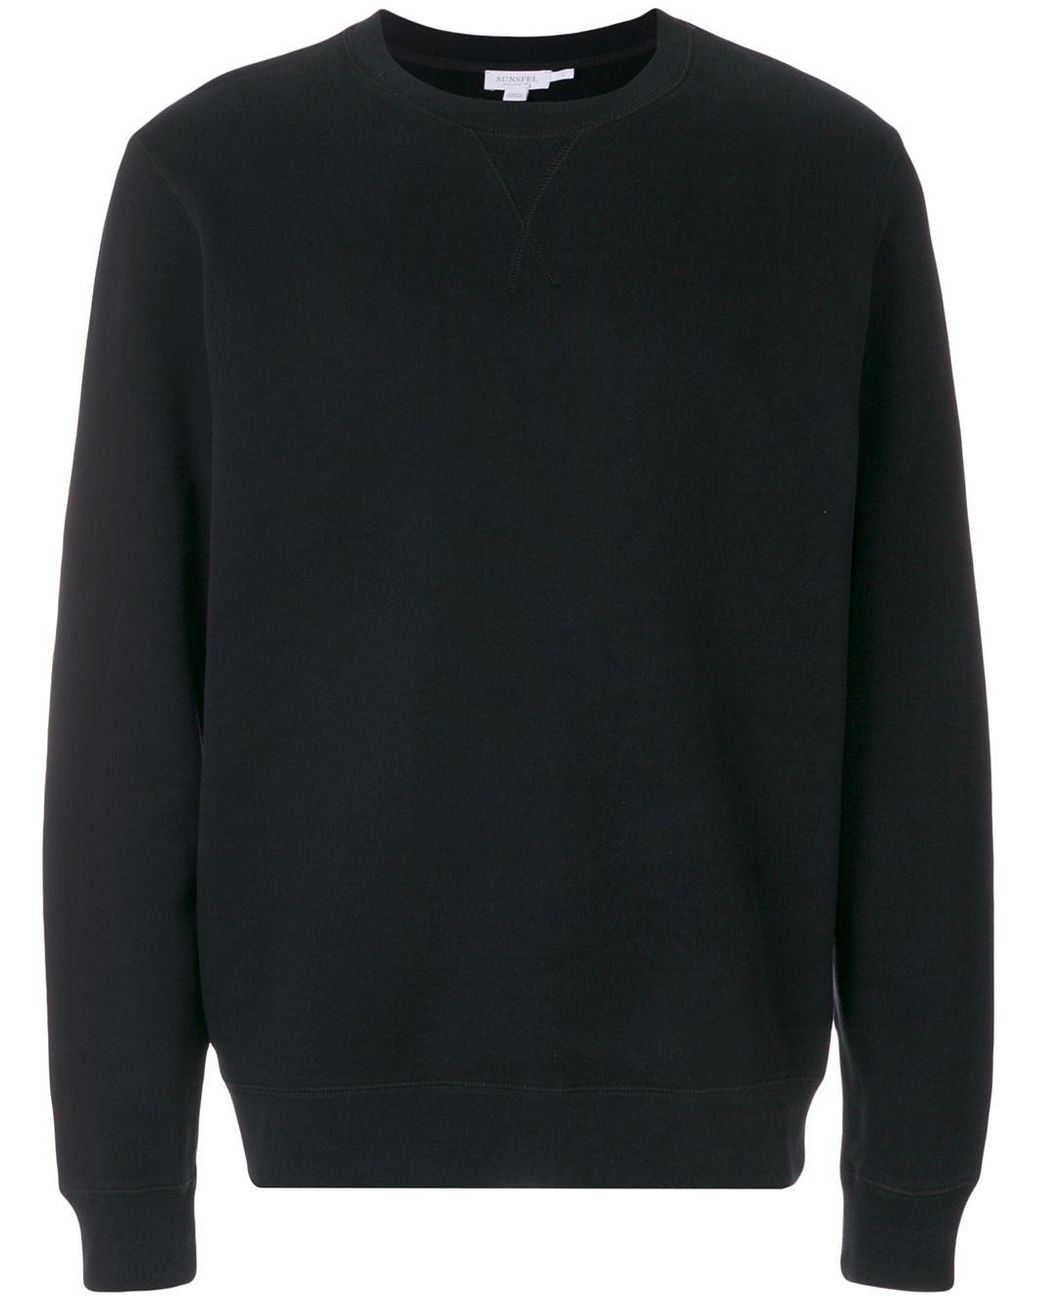 Sunspel Cotton Crew Neck Sweatshirt in Black for Men - Lyst